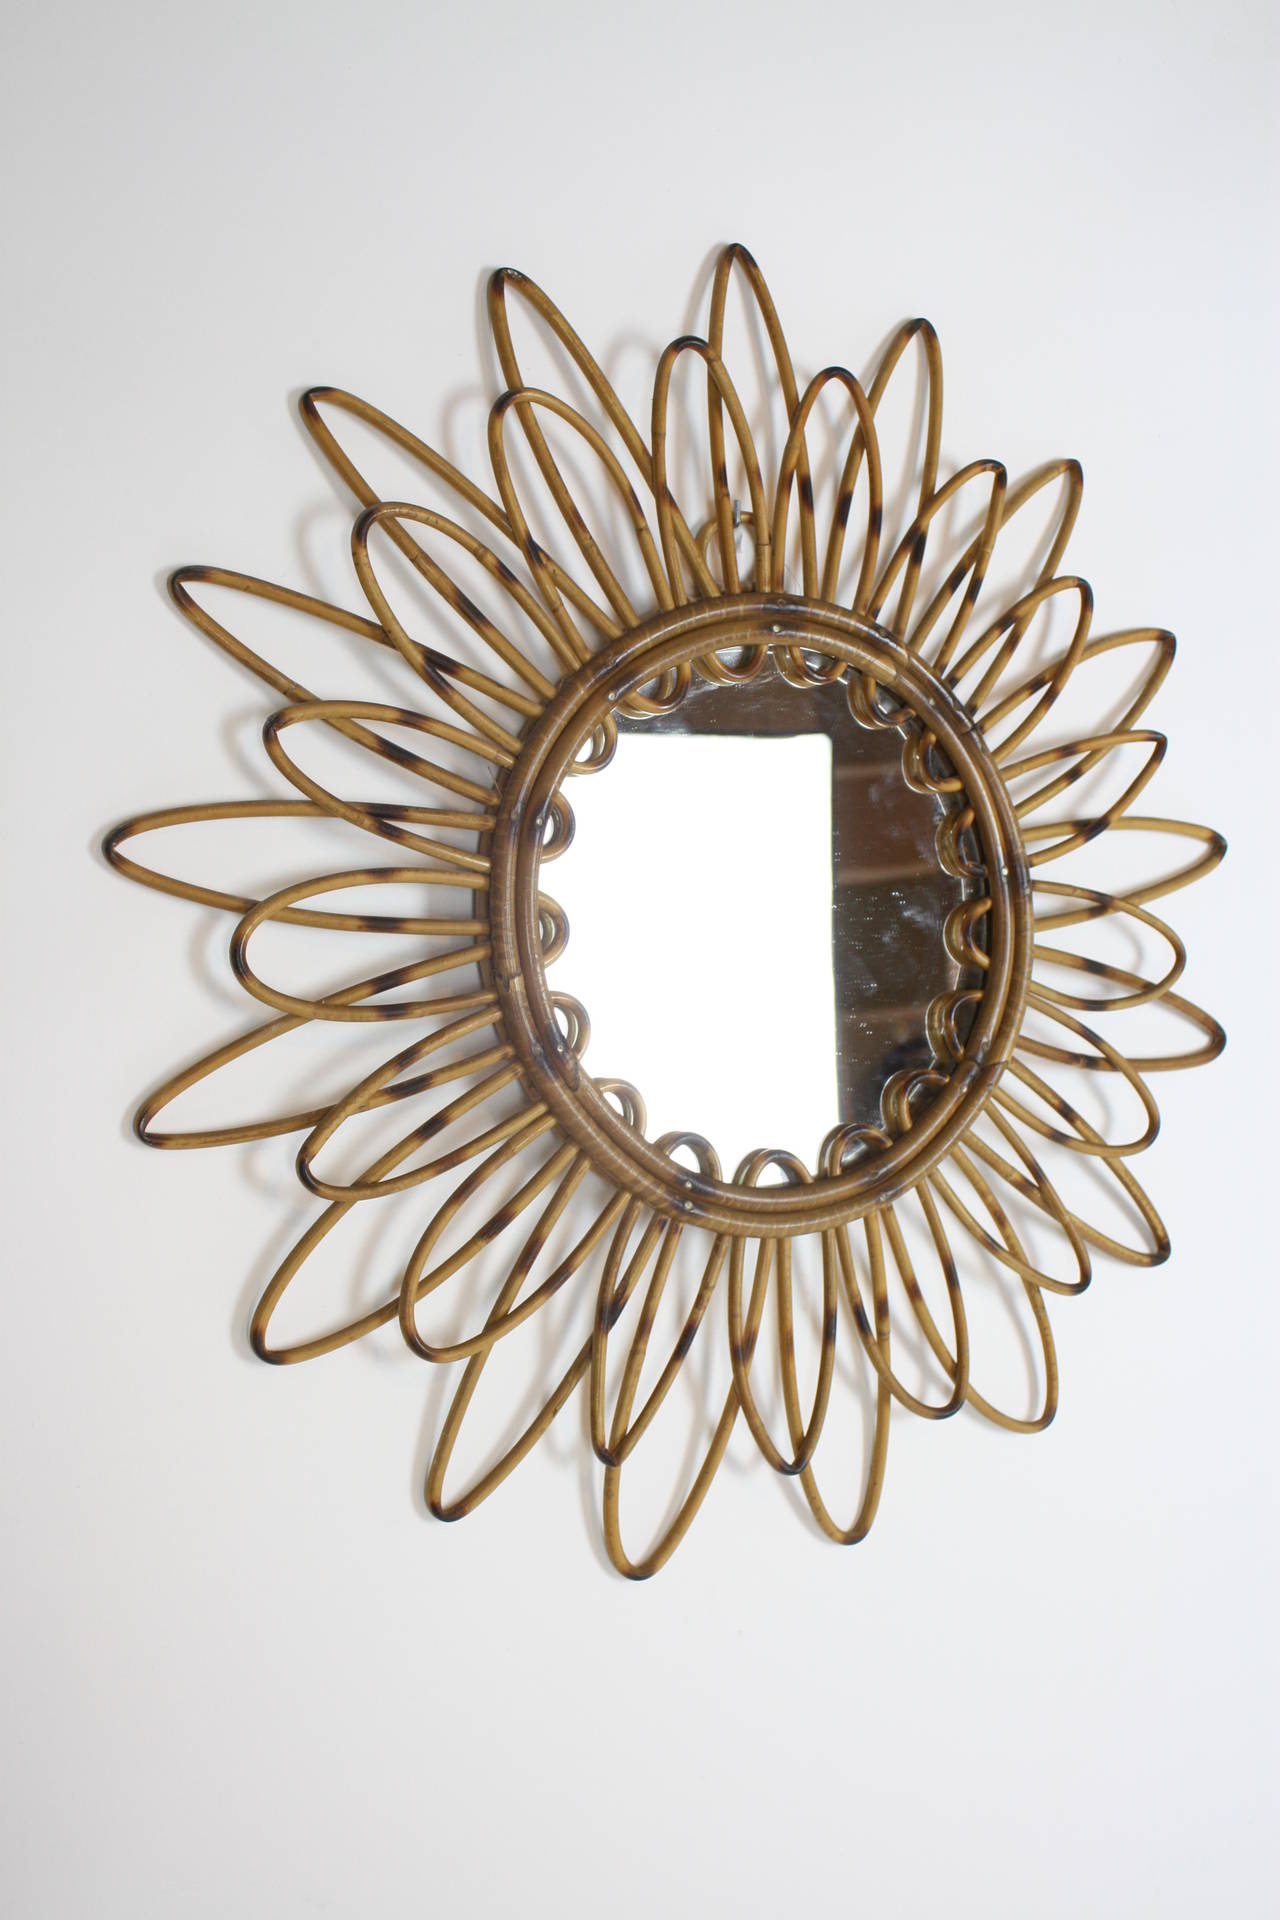 Rattan flower burst or starburst mirror. Beautiful patina with pyro details. Handmade in Spain in the 1960s. Mediterranean Coast style.